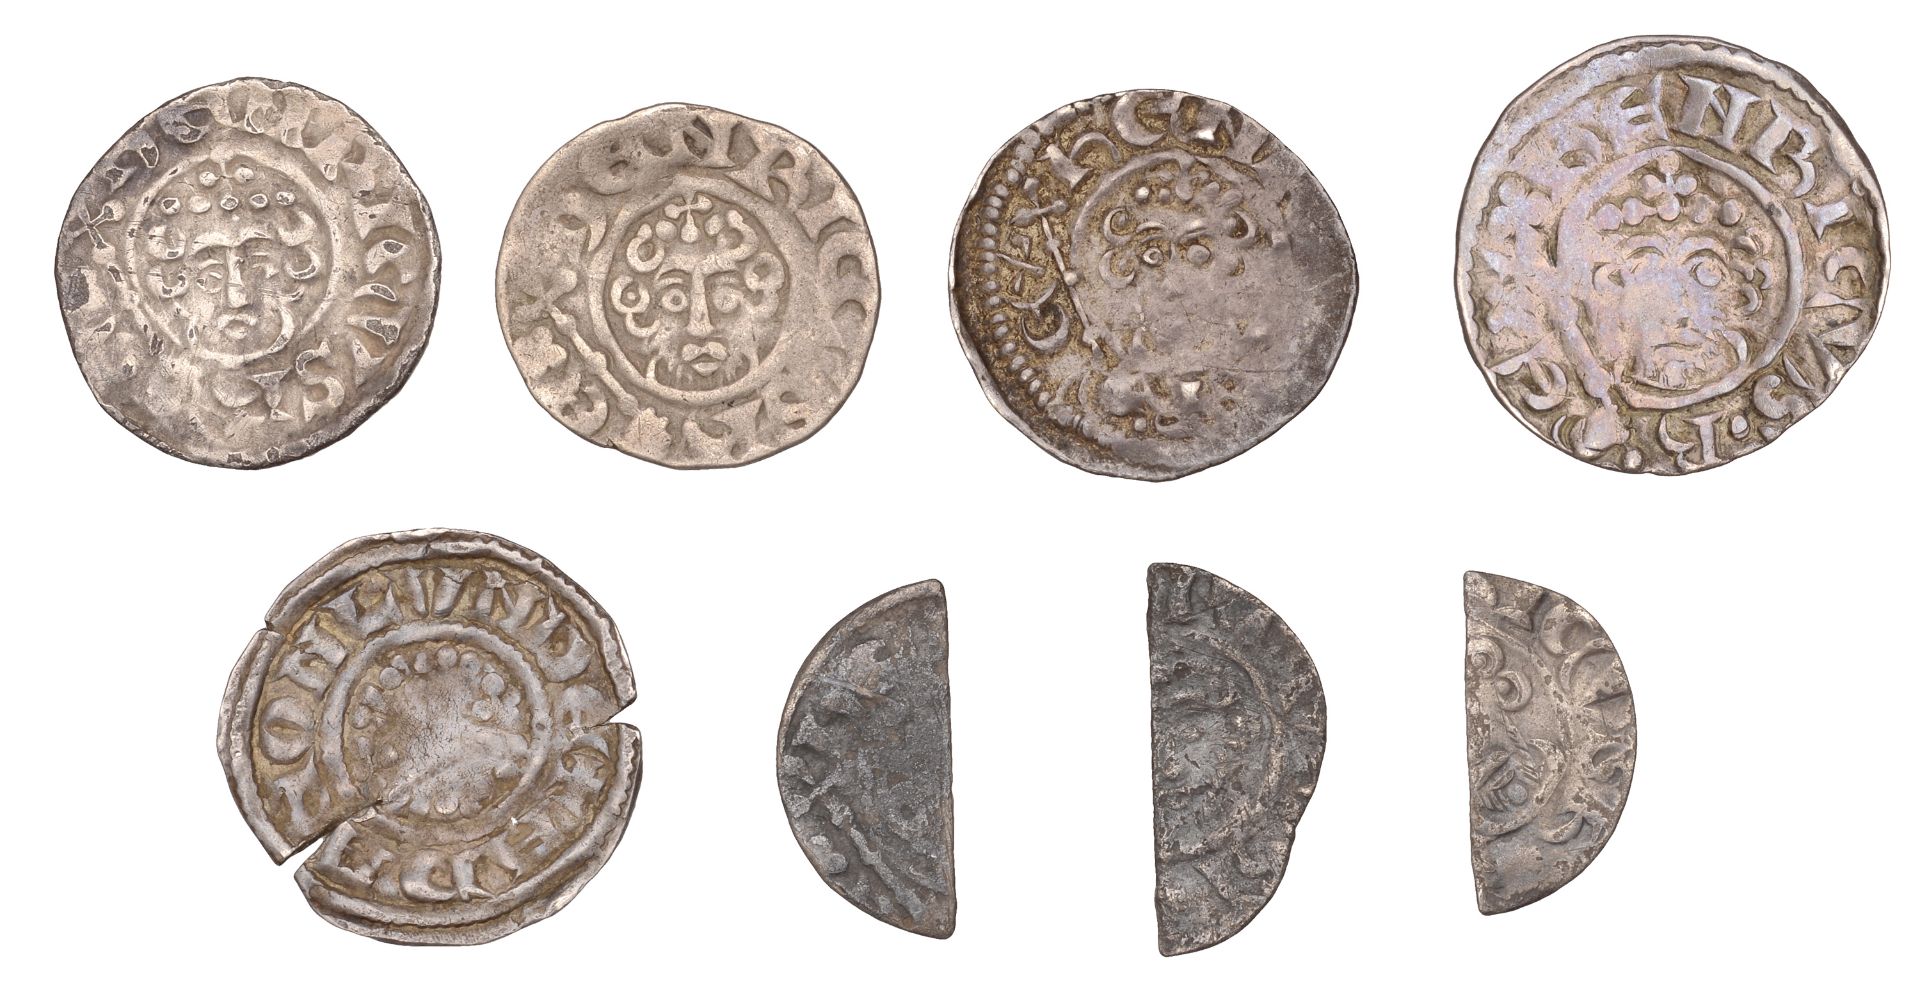 Henry II (1154-1189), Short Cross coinage, Penny, class Ib1, London, Willelm, willelm Â· on Â·...